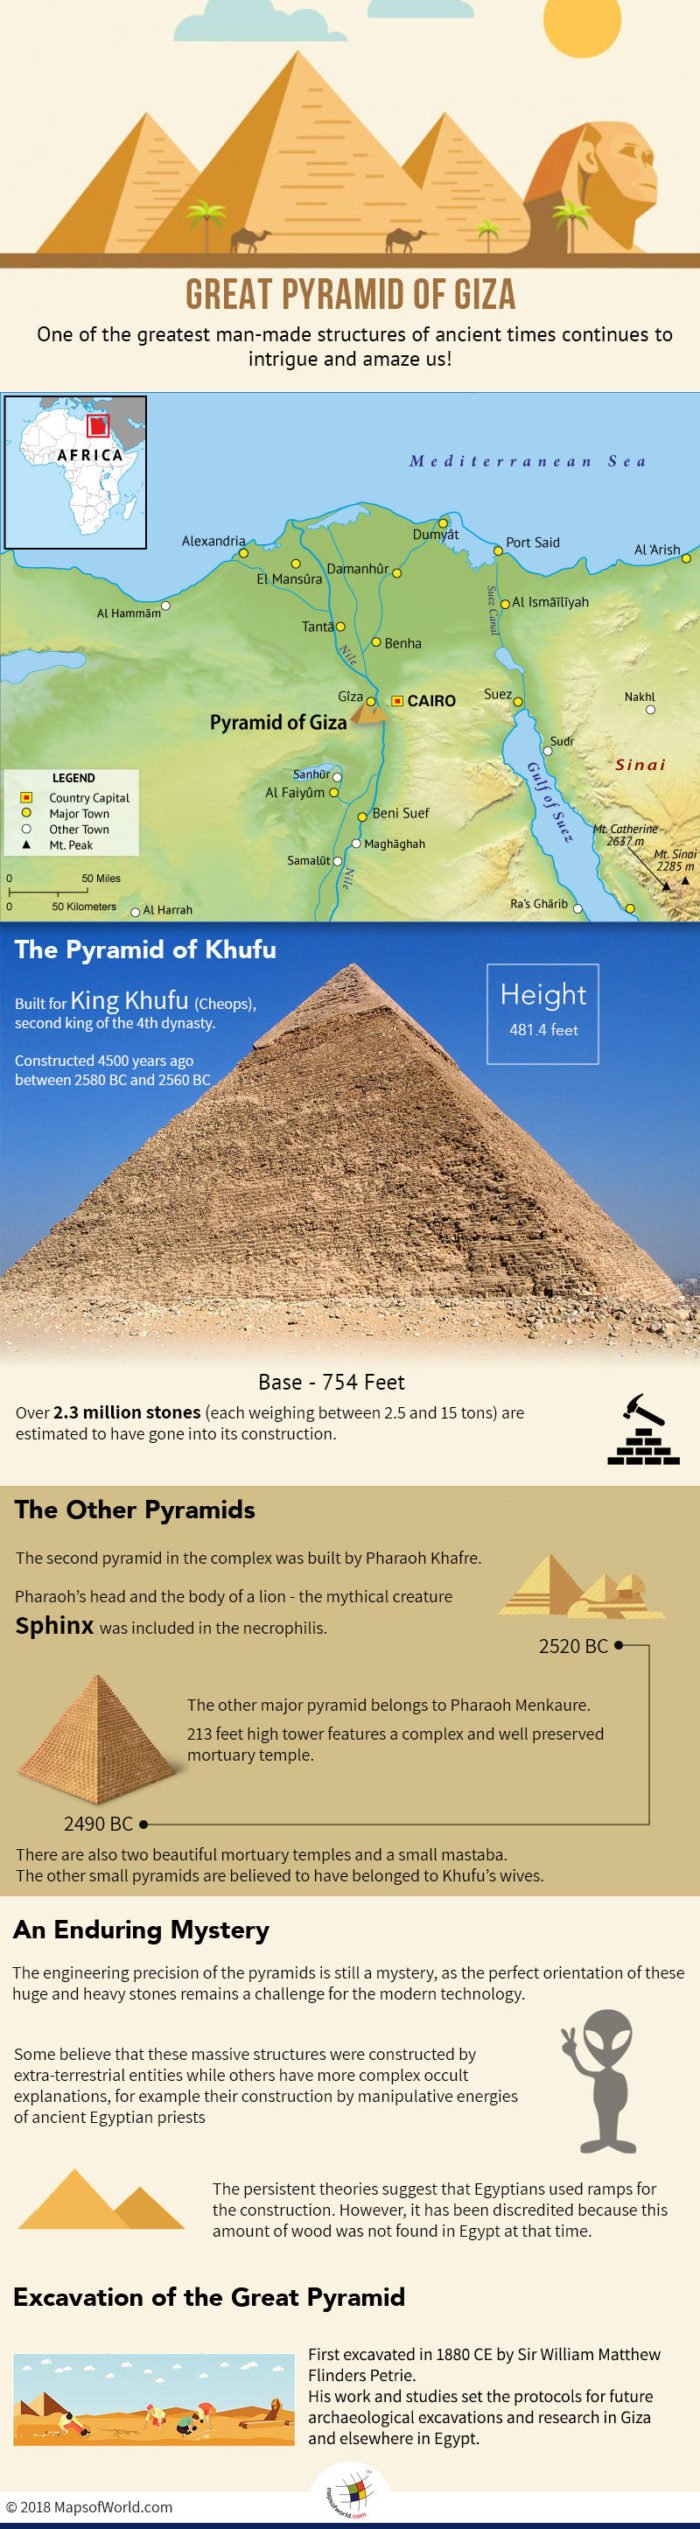 Infographic elaborating history of Great Pyramids of Giza